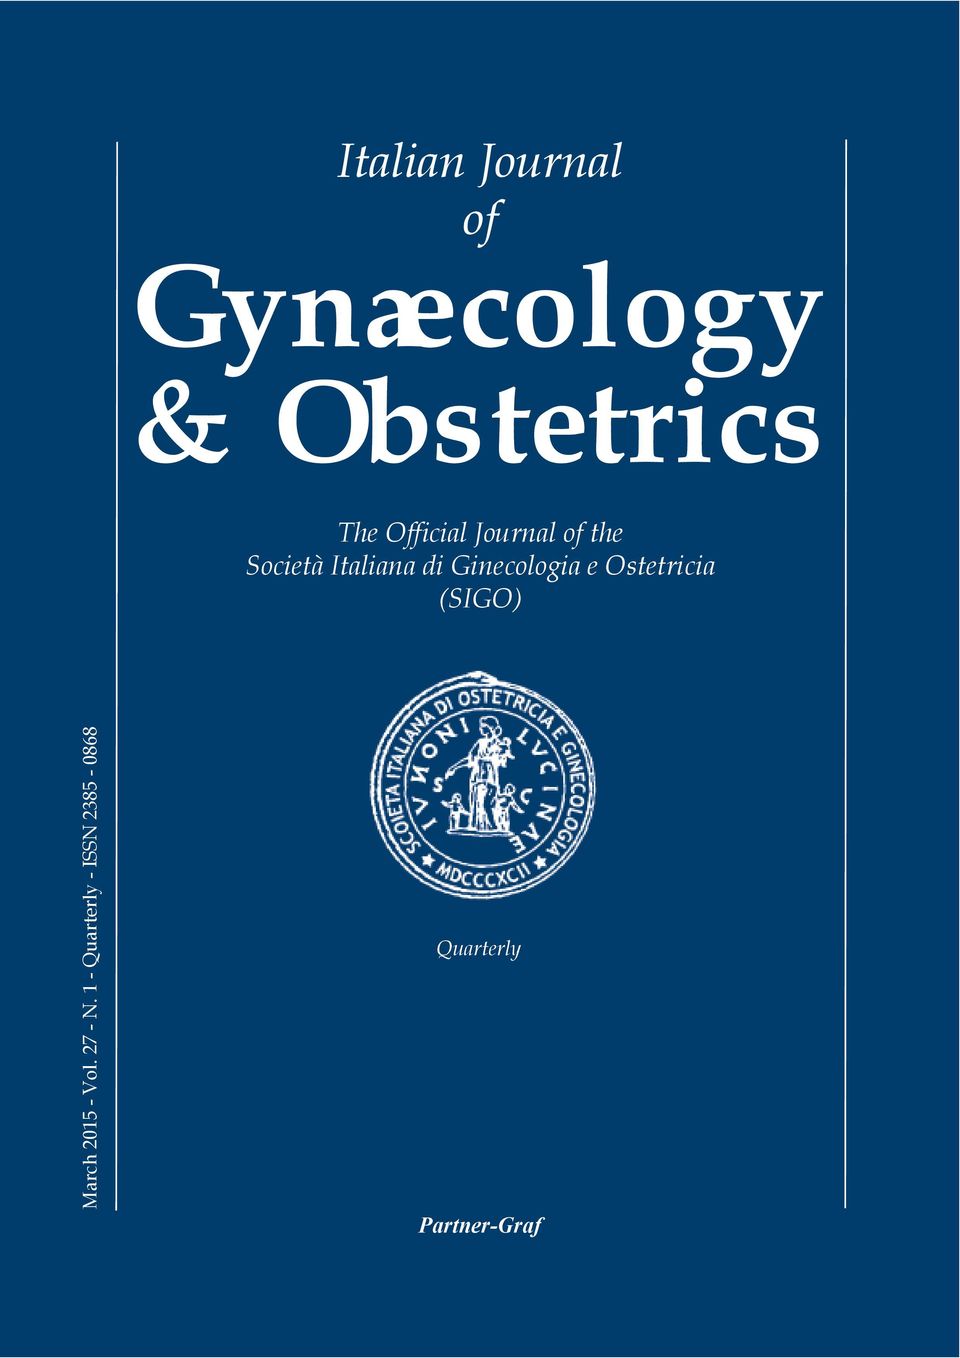 Ginecologia e Ostetricia (SIGO) March 2015 - Vol.